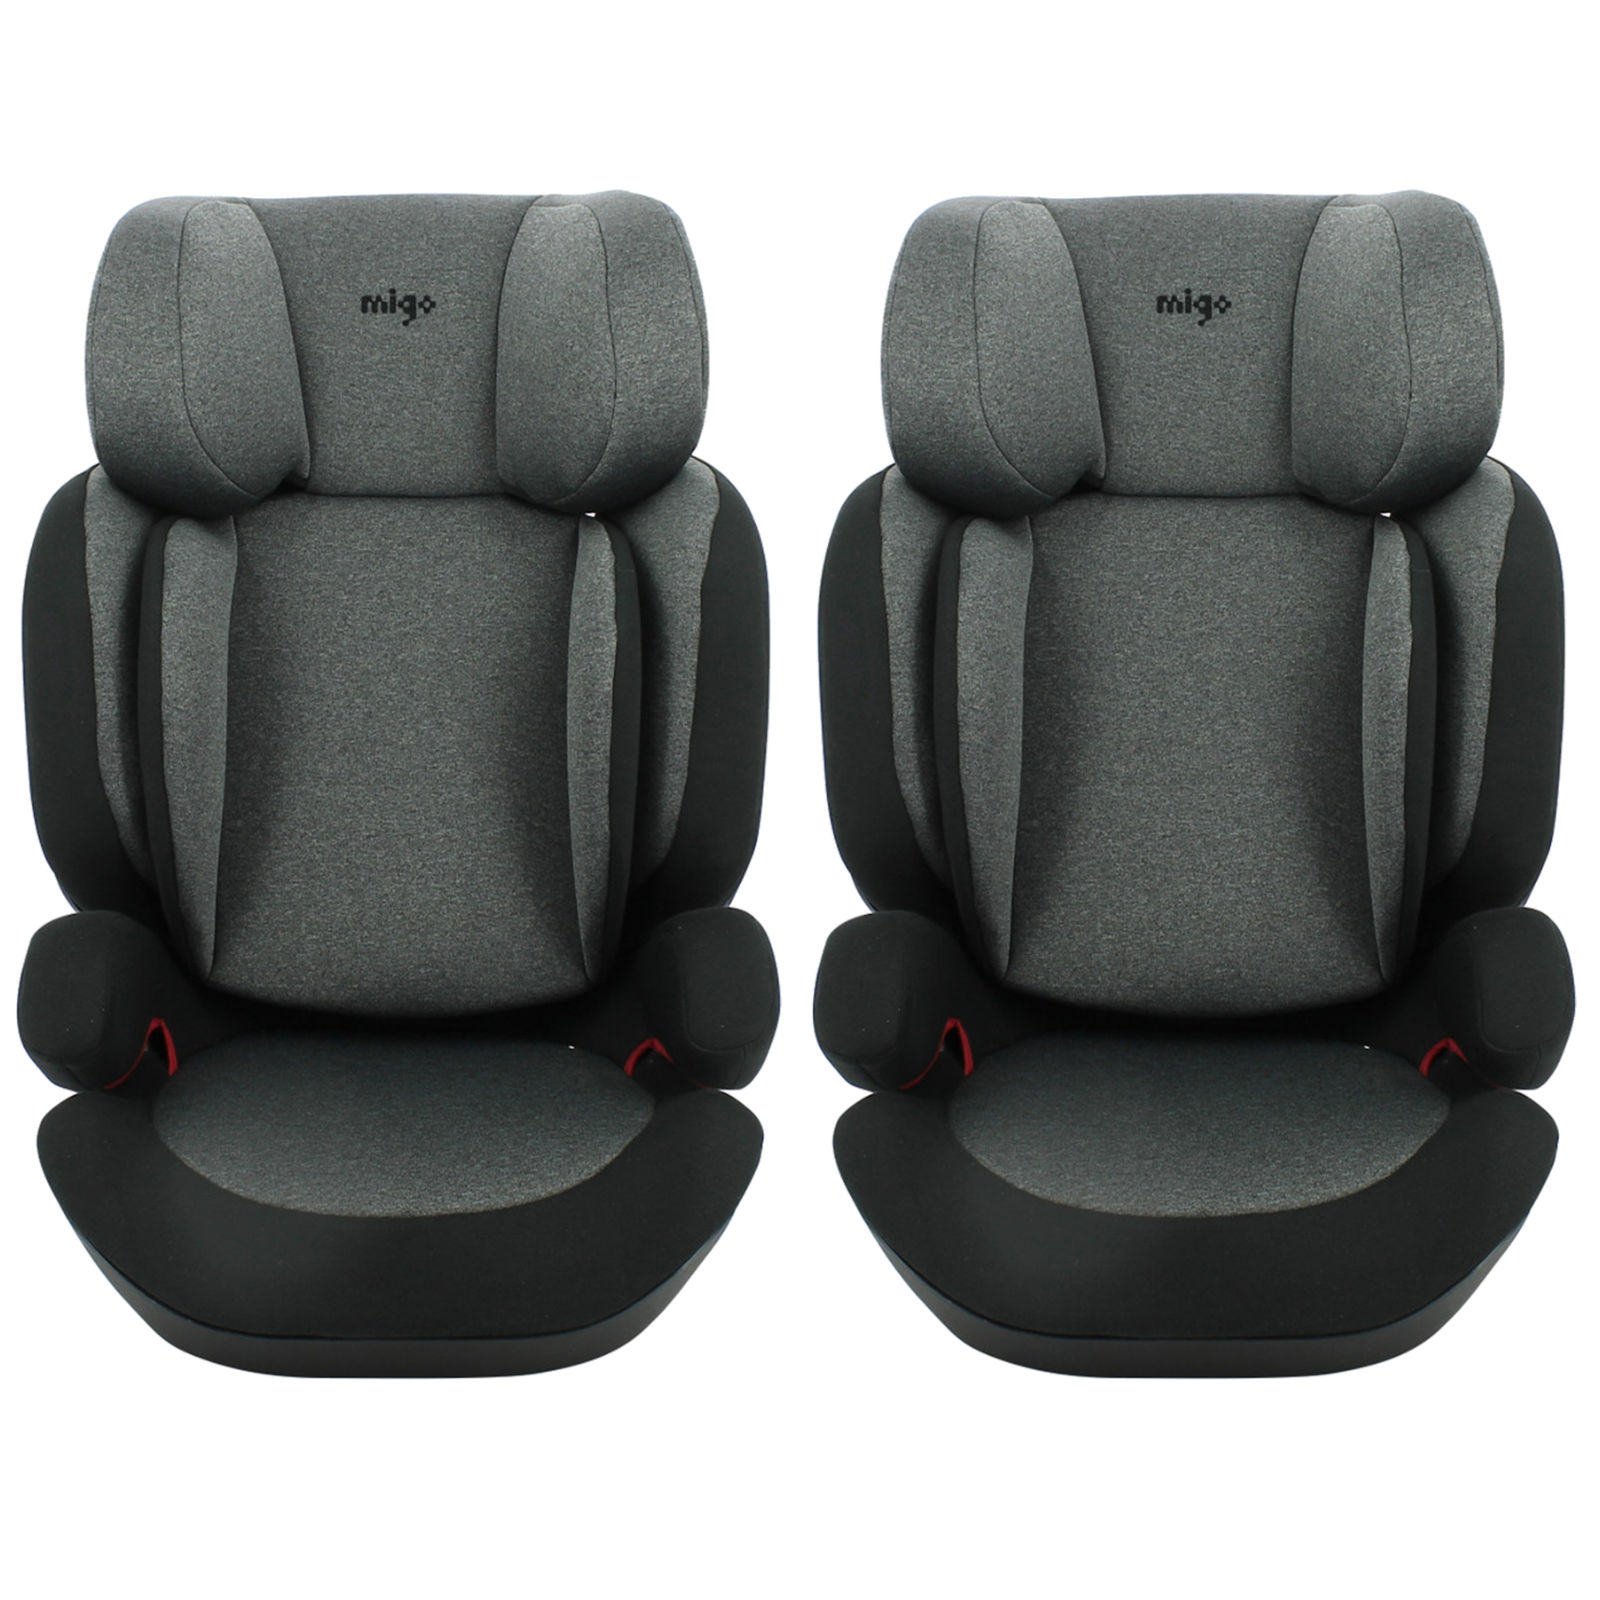 Migo Mirage Luxury ISOFIX Group 2,3 Car Seat (2 Pack) - Grey